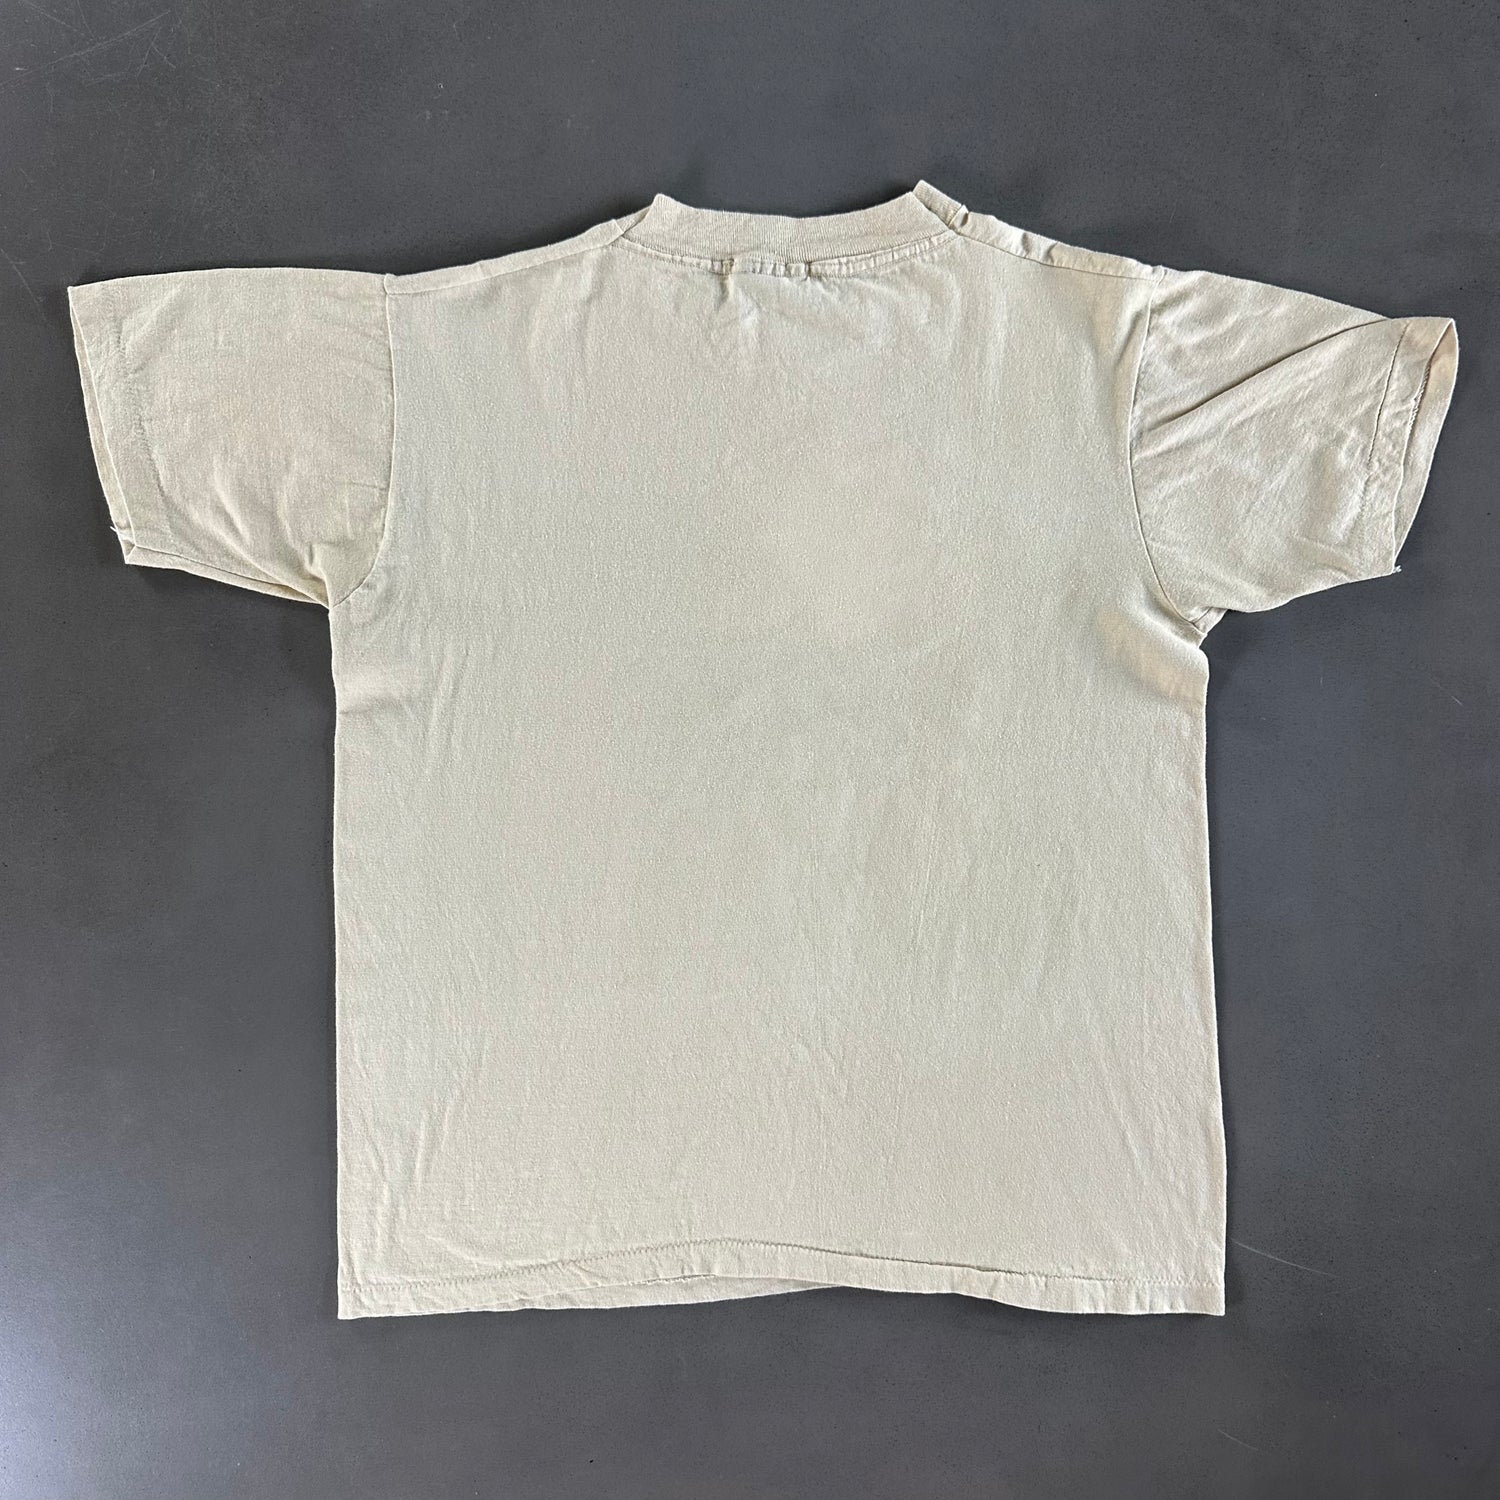 Vintage 1990s Boston T-shirt size Large